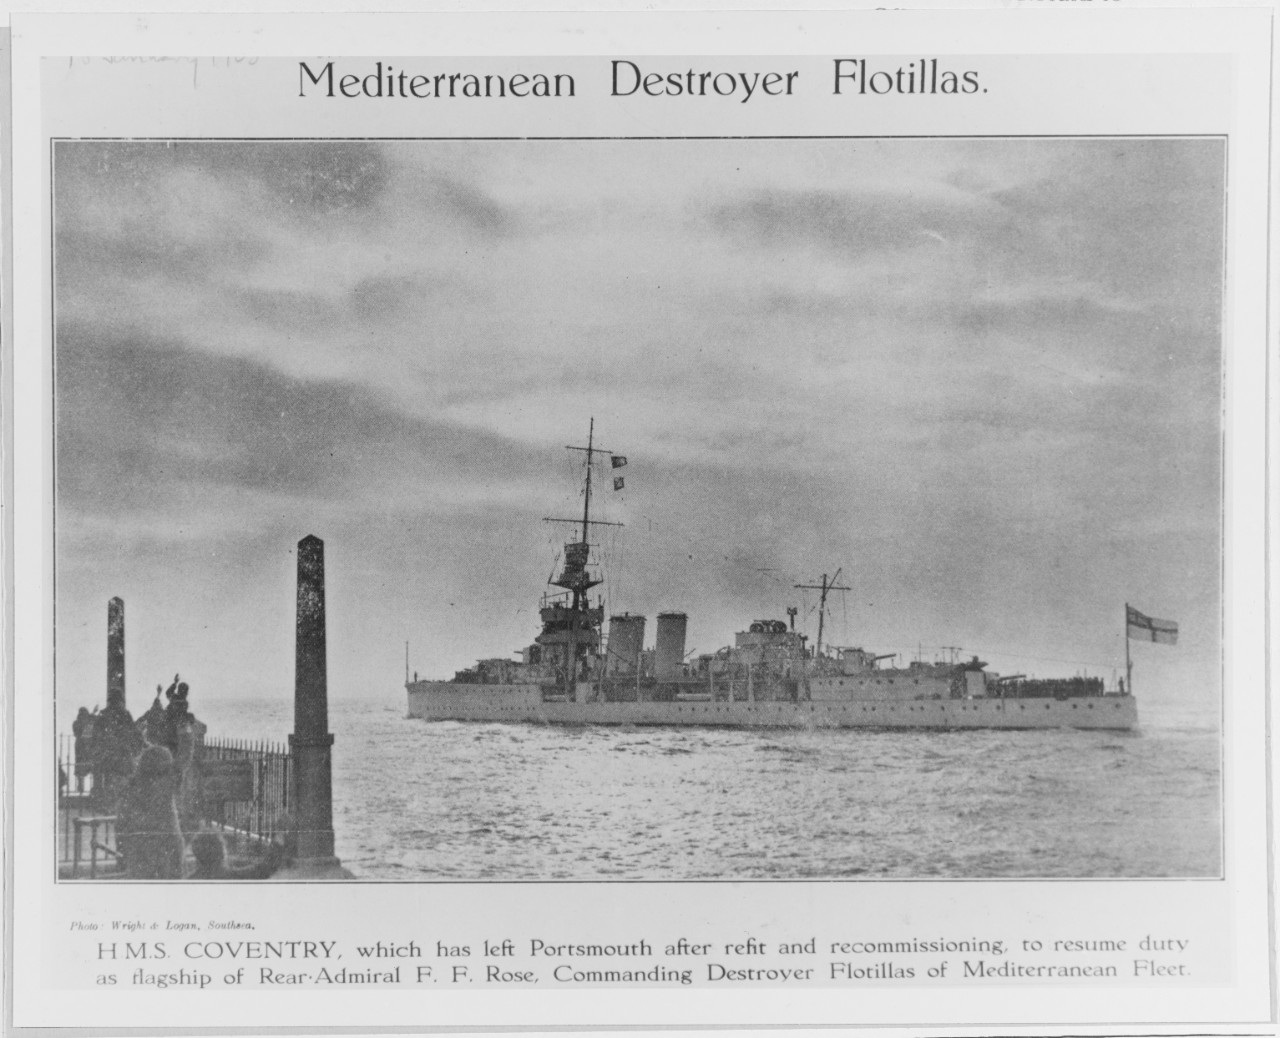 HMS COVENTRY (British Cruiser, 1917)